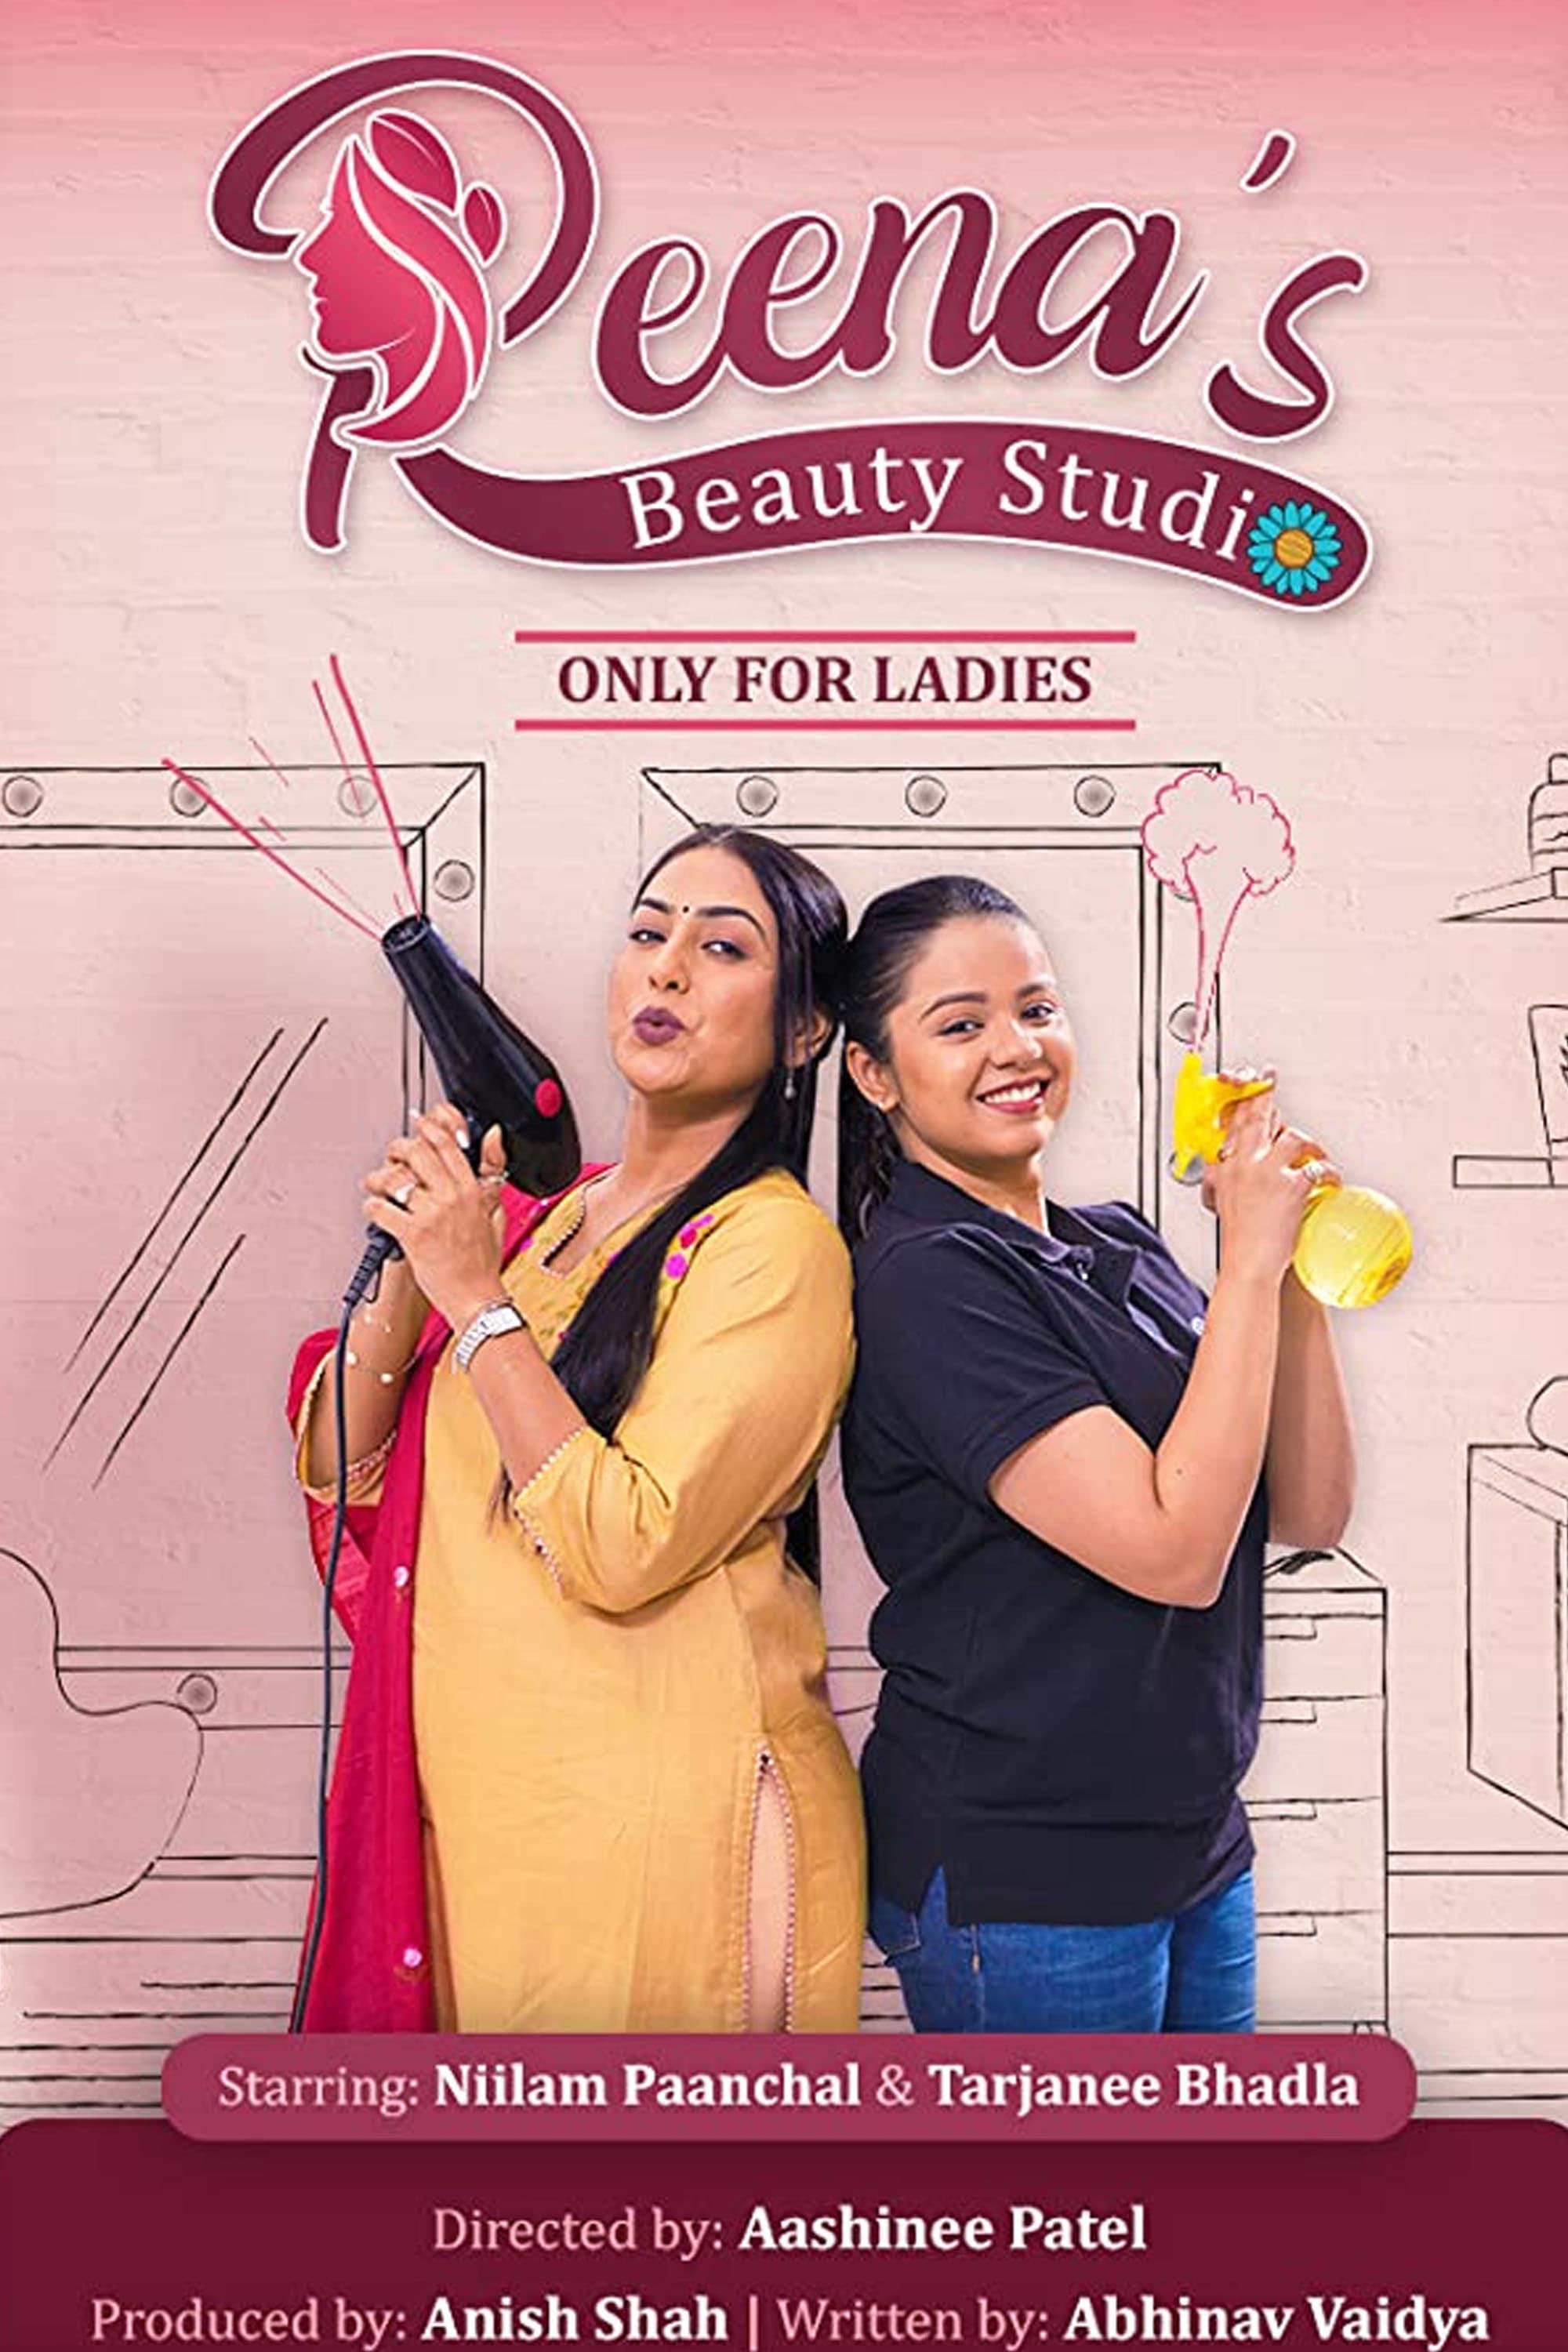 Reena's Beauty Studio